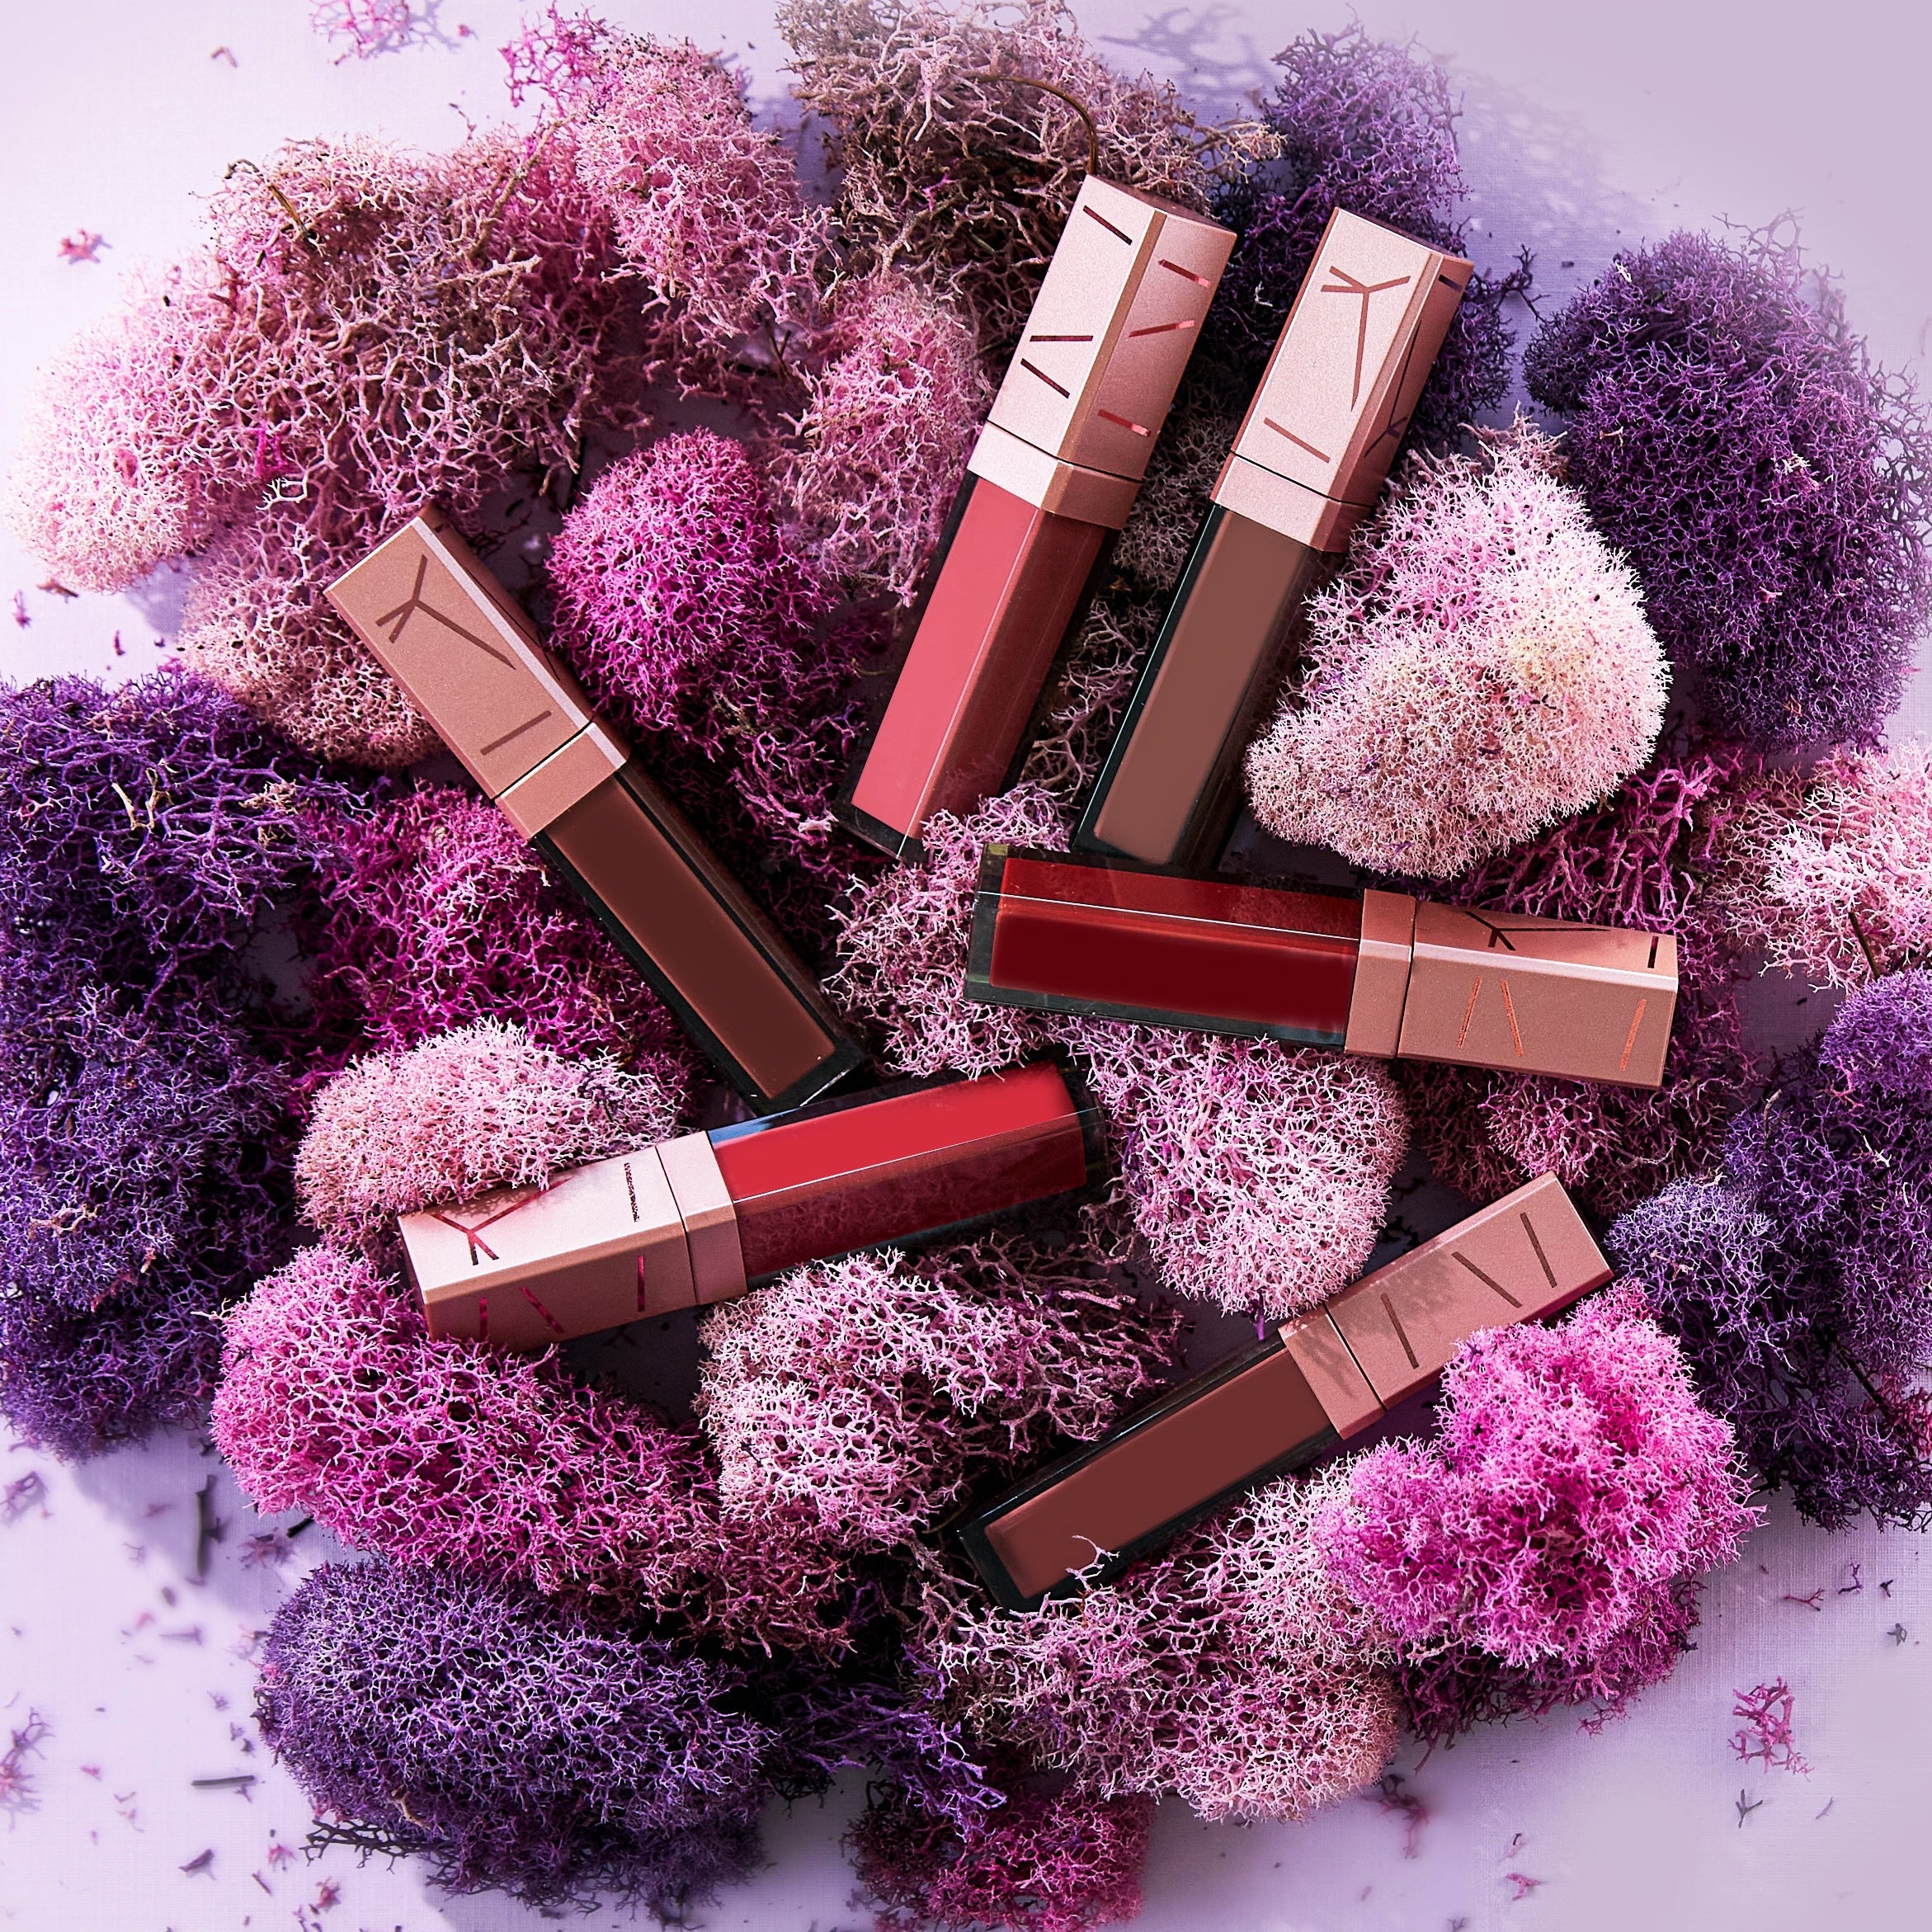 Stylized image of ATHR Beauty's Lip Creme shades.